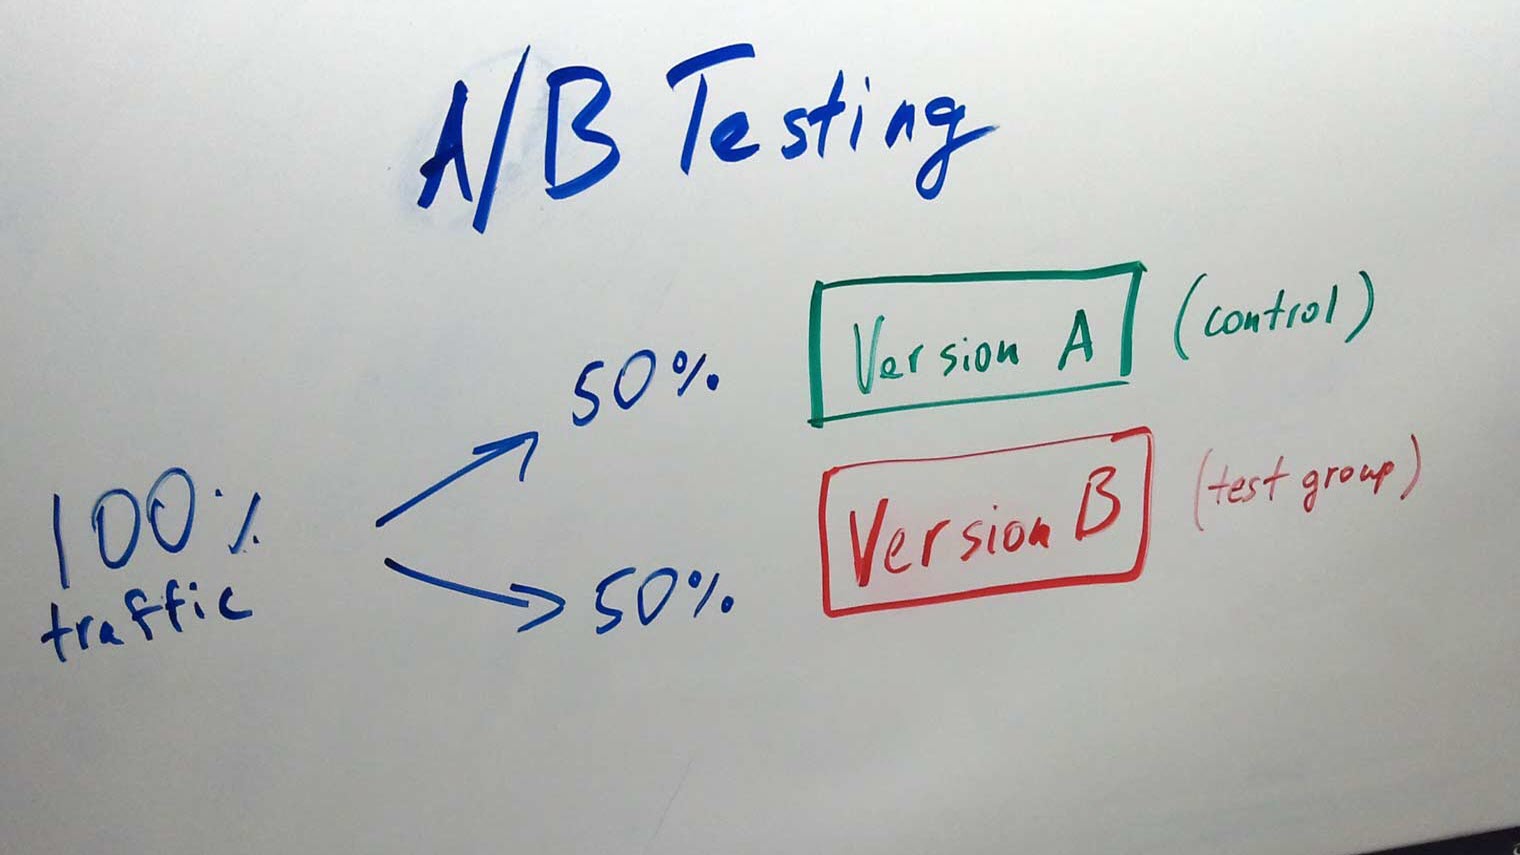 B2B_Web_Design-ab-testing